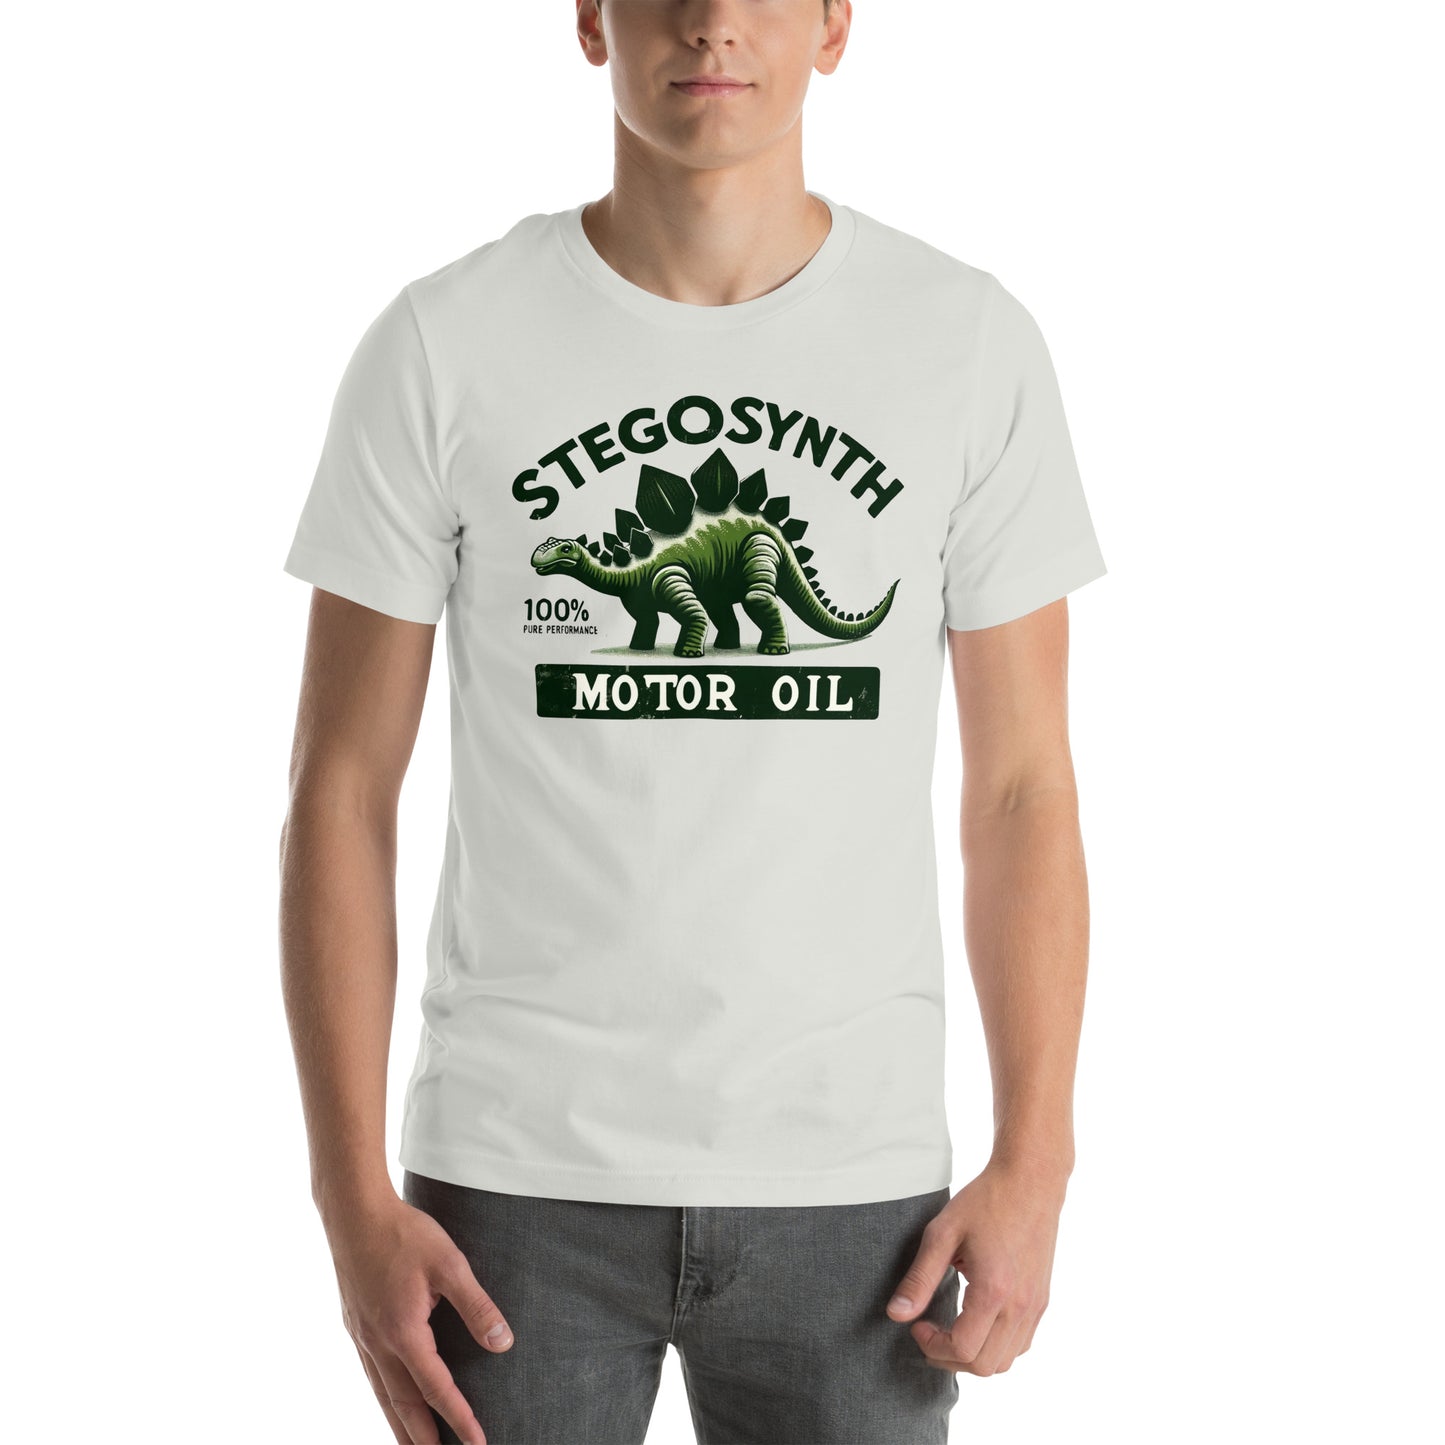 Stegosynth Motor Oil Dinosaur Graphic Unisex t-shirt